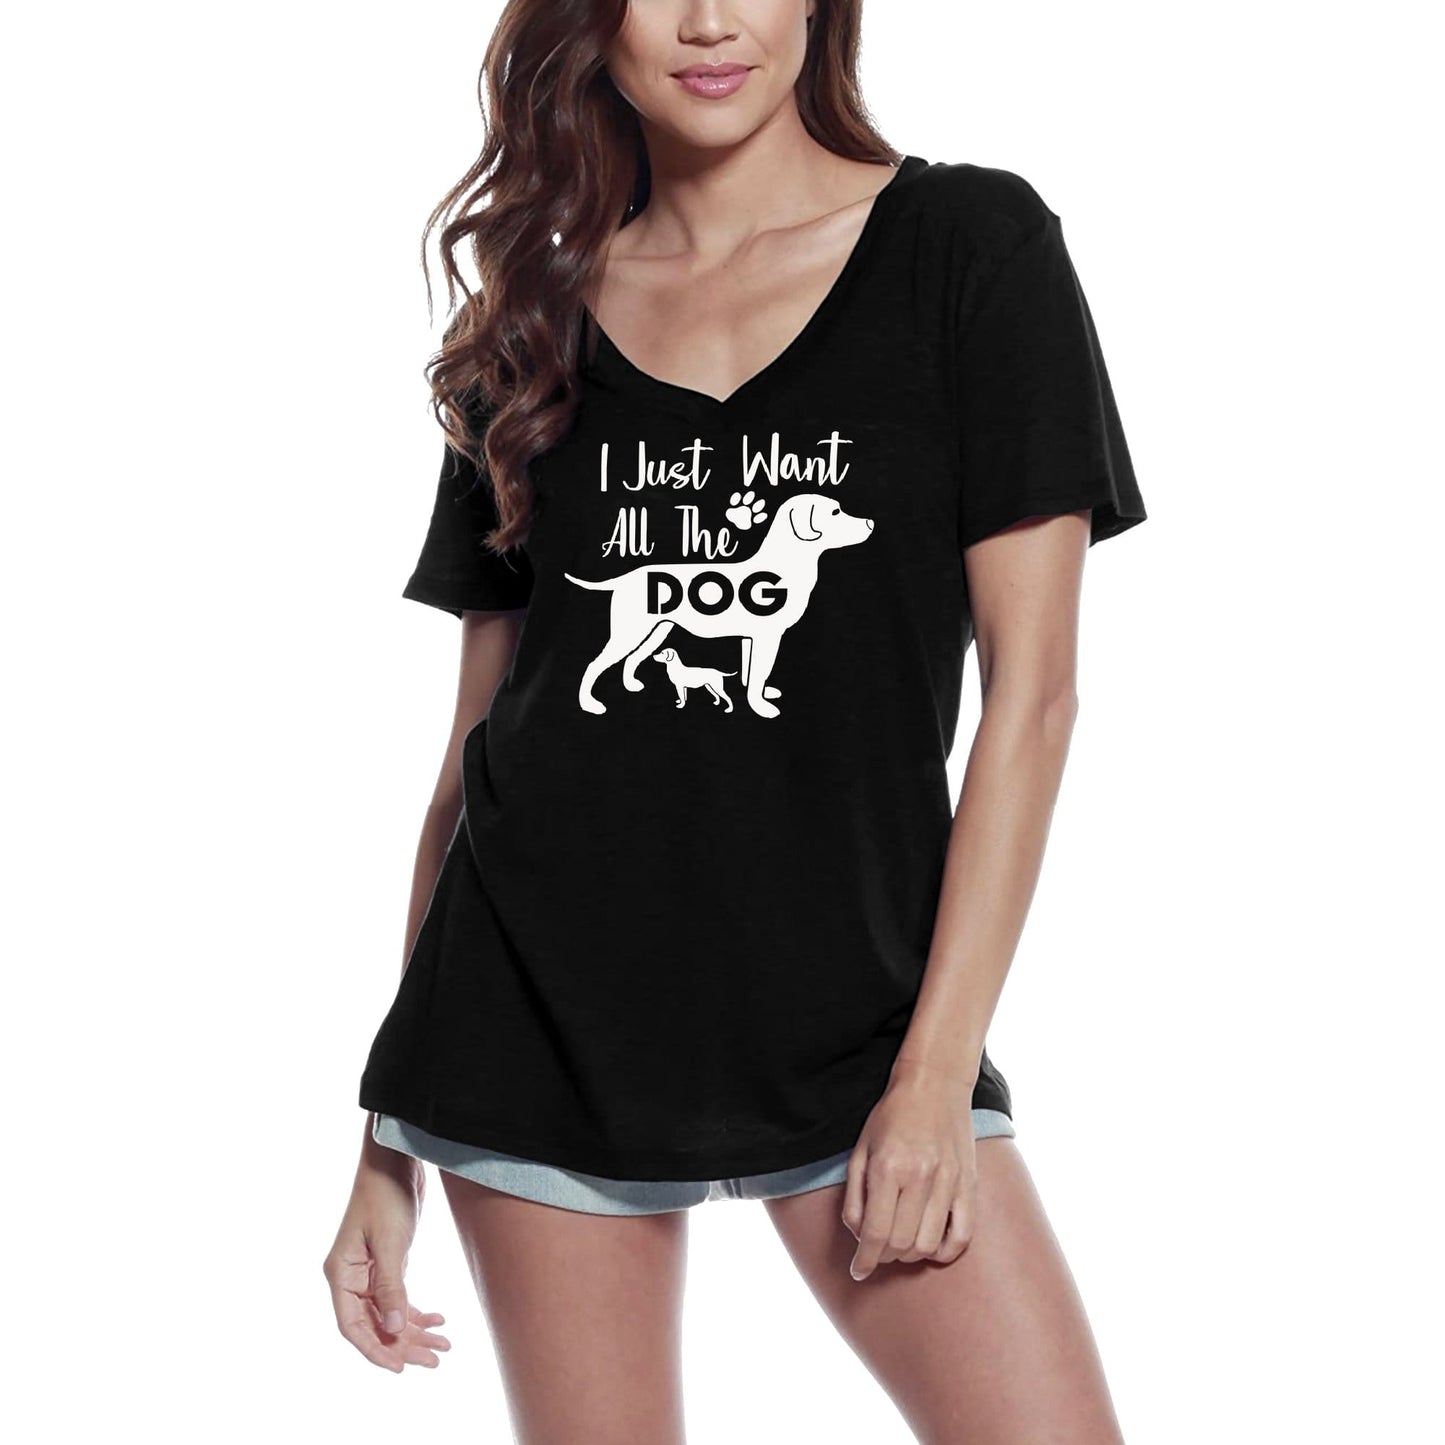 ULTRABASIC Women's T-Shirt I Just Want All the Dog - Short Sleeve Tee Shirt Tops